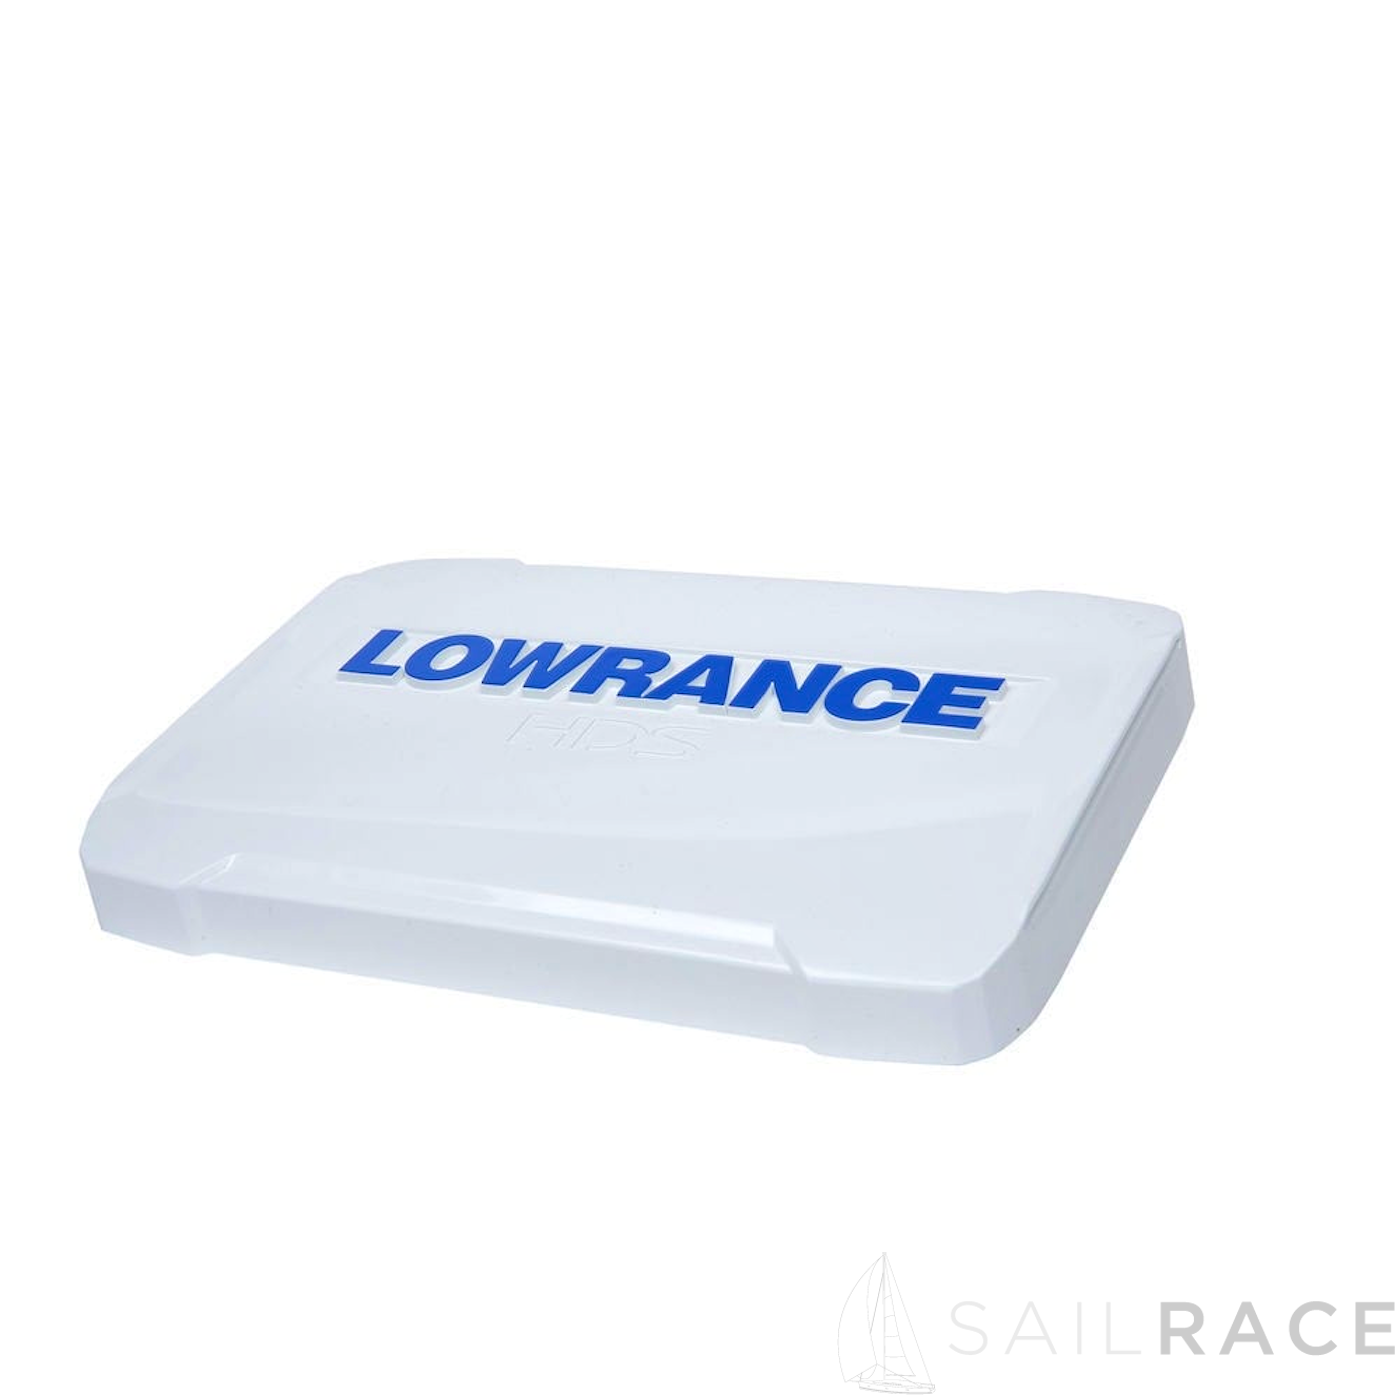 Lowrance HDS-7 GEN3 SUNCOVER - immagine 2